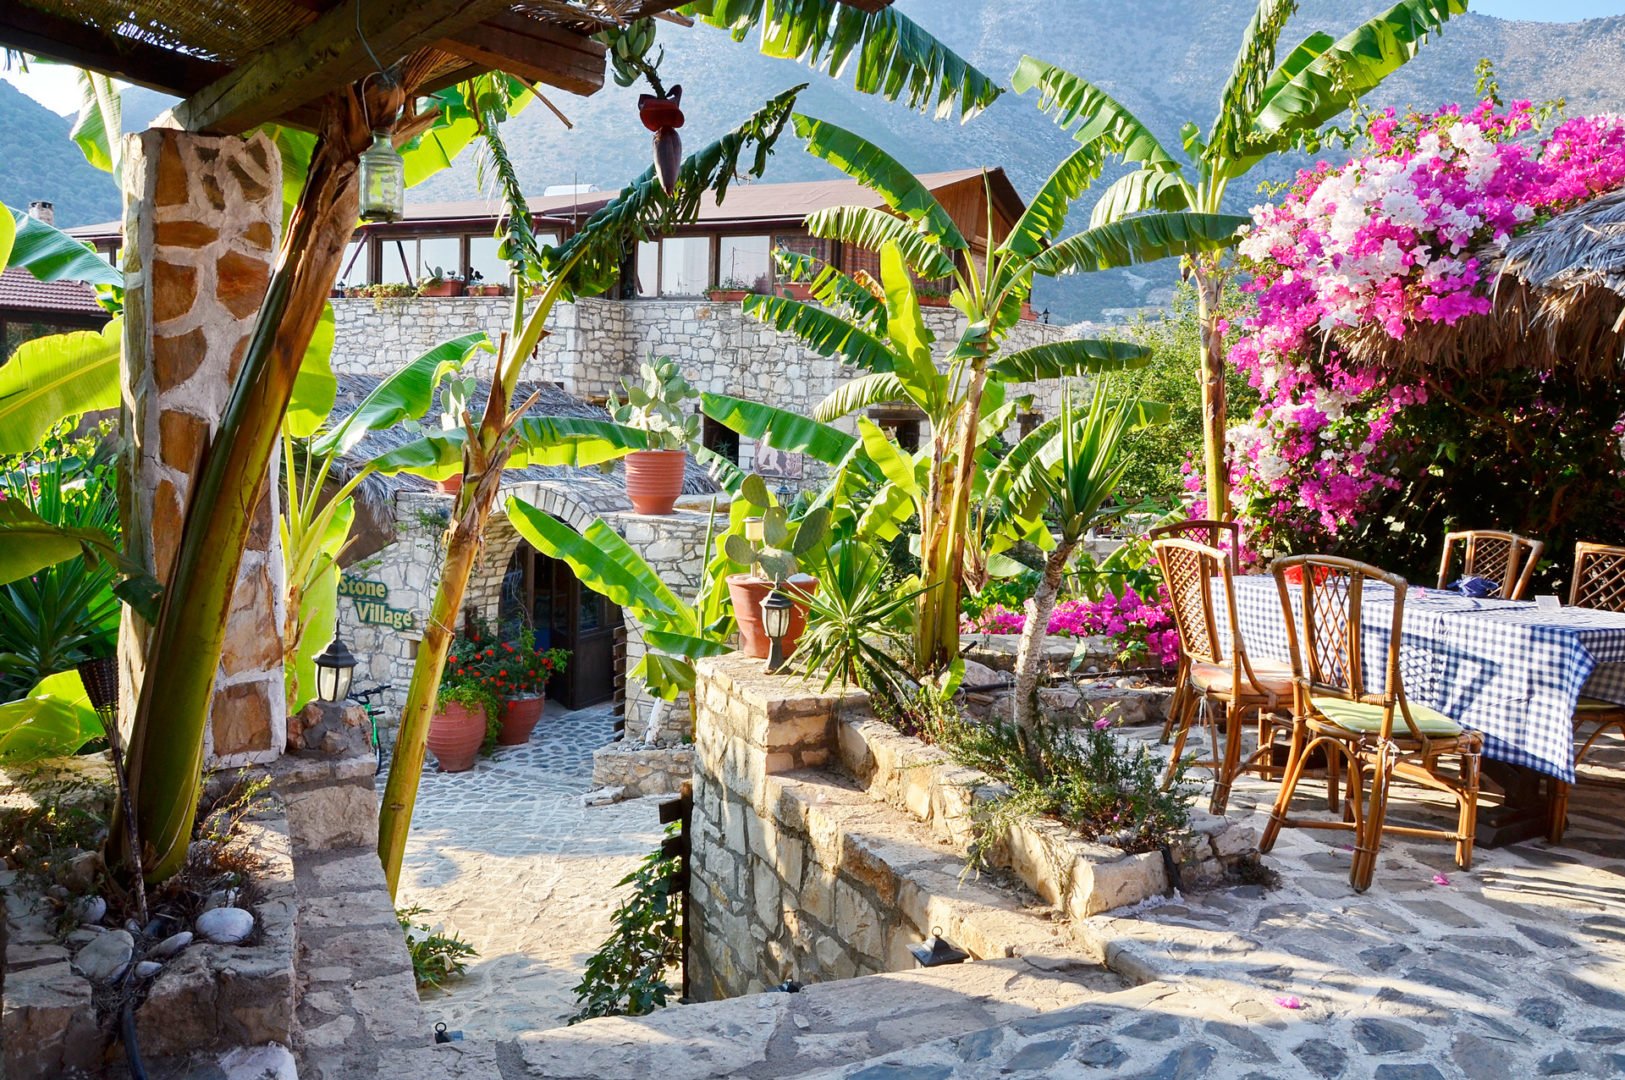 Hotel in Bali Crete - Stone Village - Outdoors Sitting Area 4